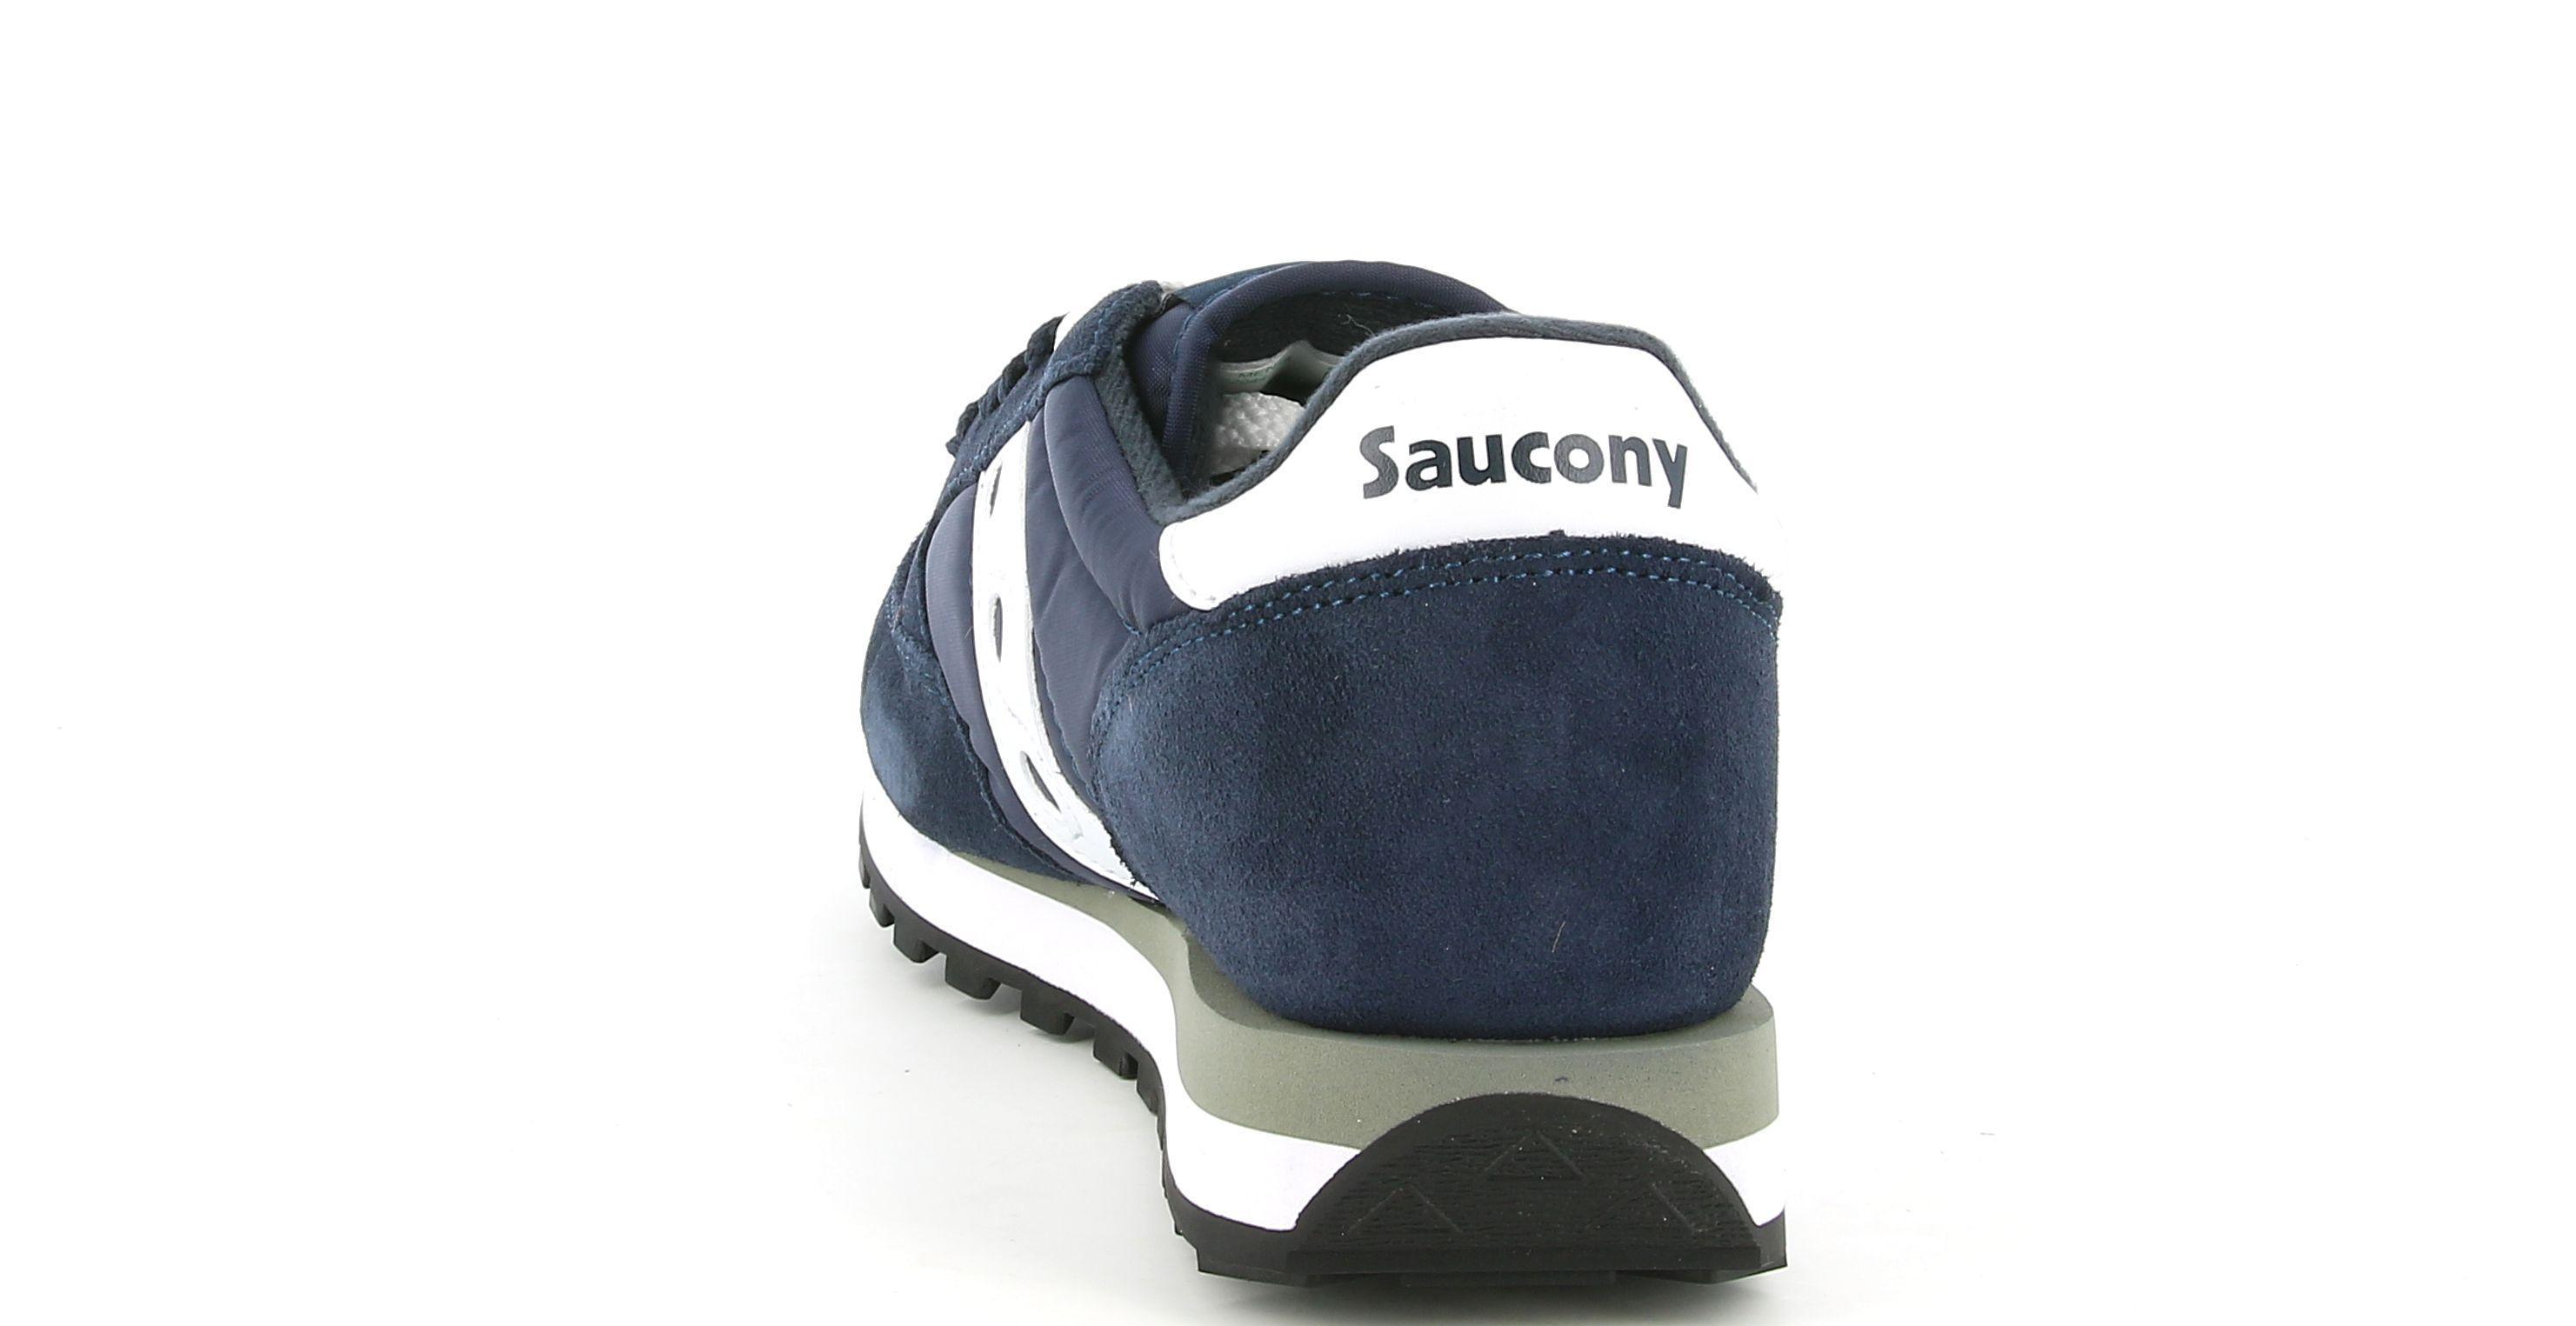 saucony scarpa sportiva saucony jazz s2044-316. da uomo, colore blu